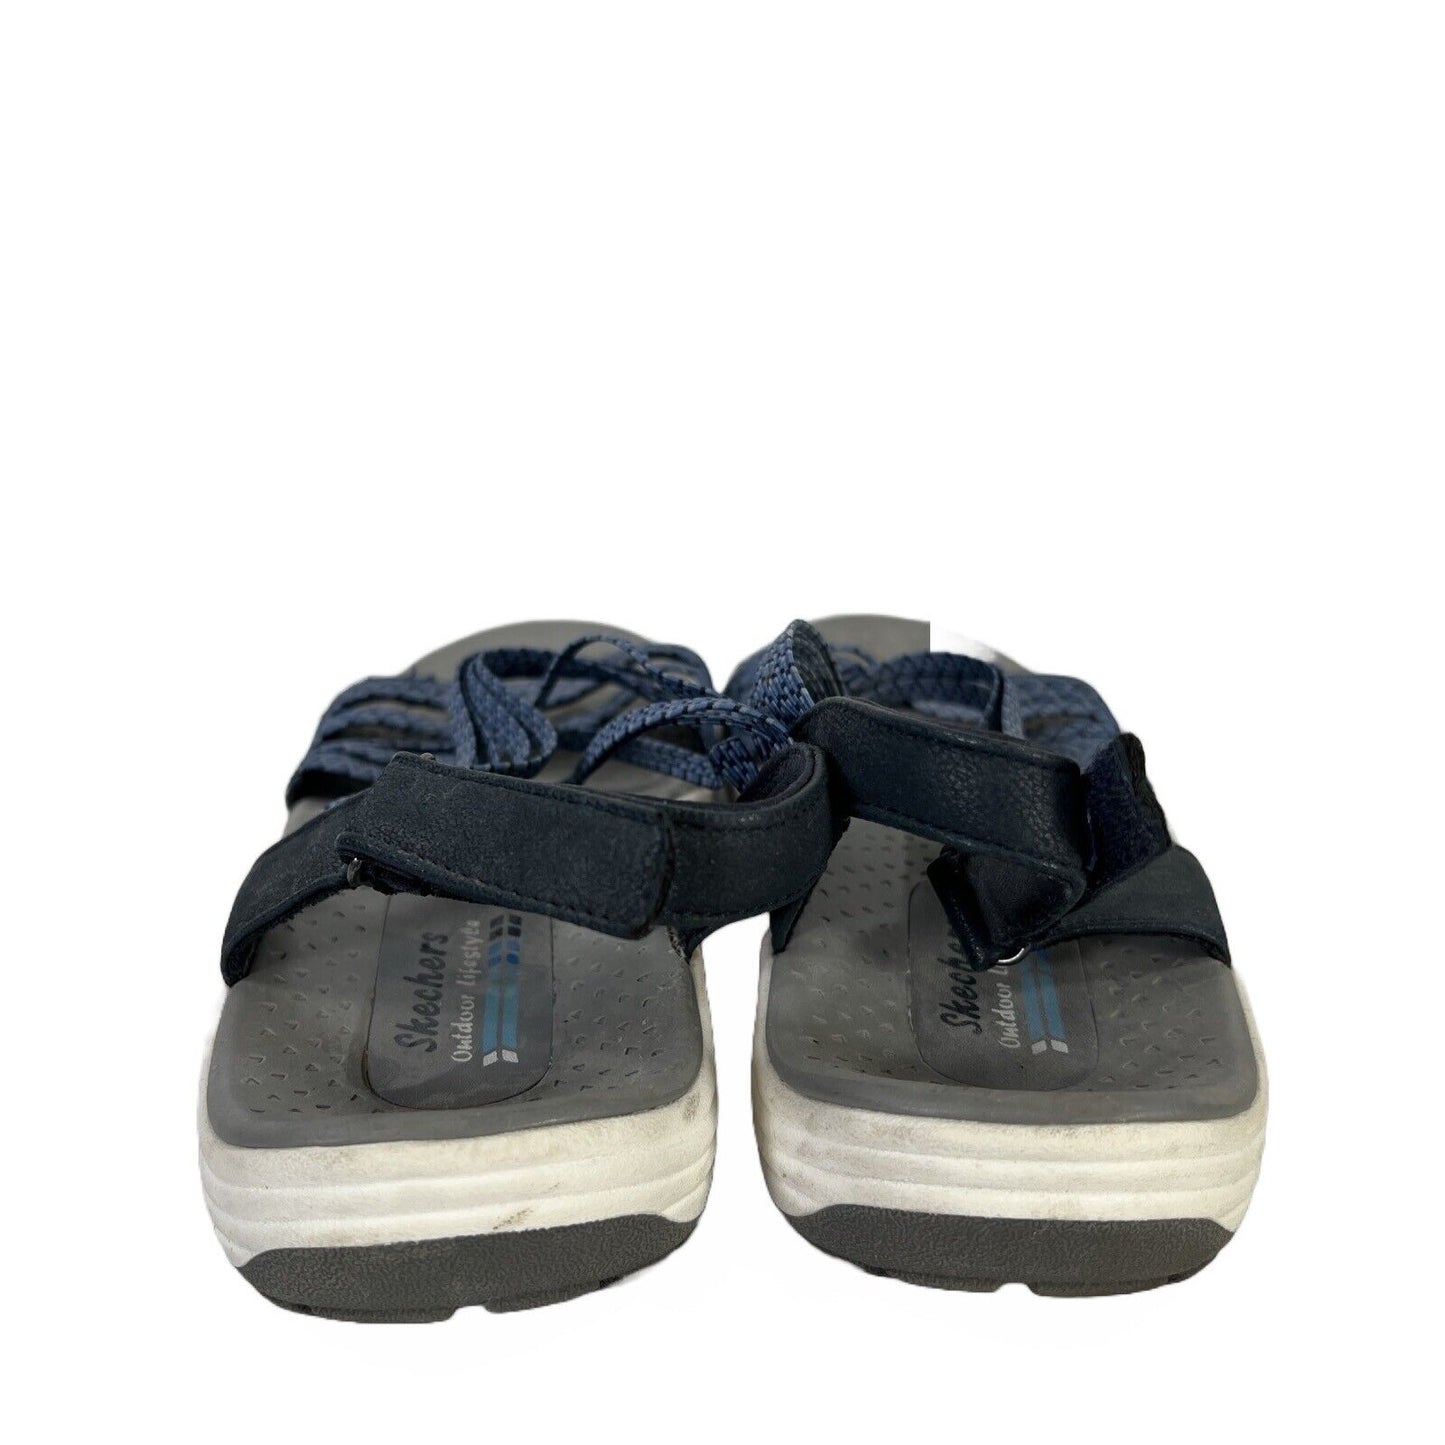 Skechers Women's Blue/Gray Ankle Strap Strappy Sport Sandals - 8